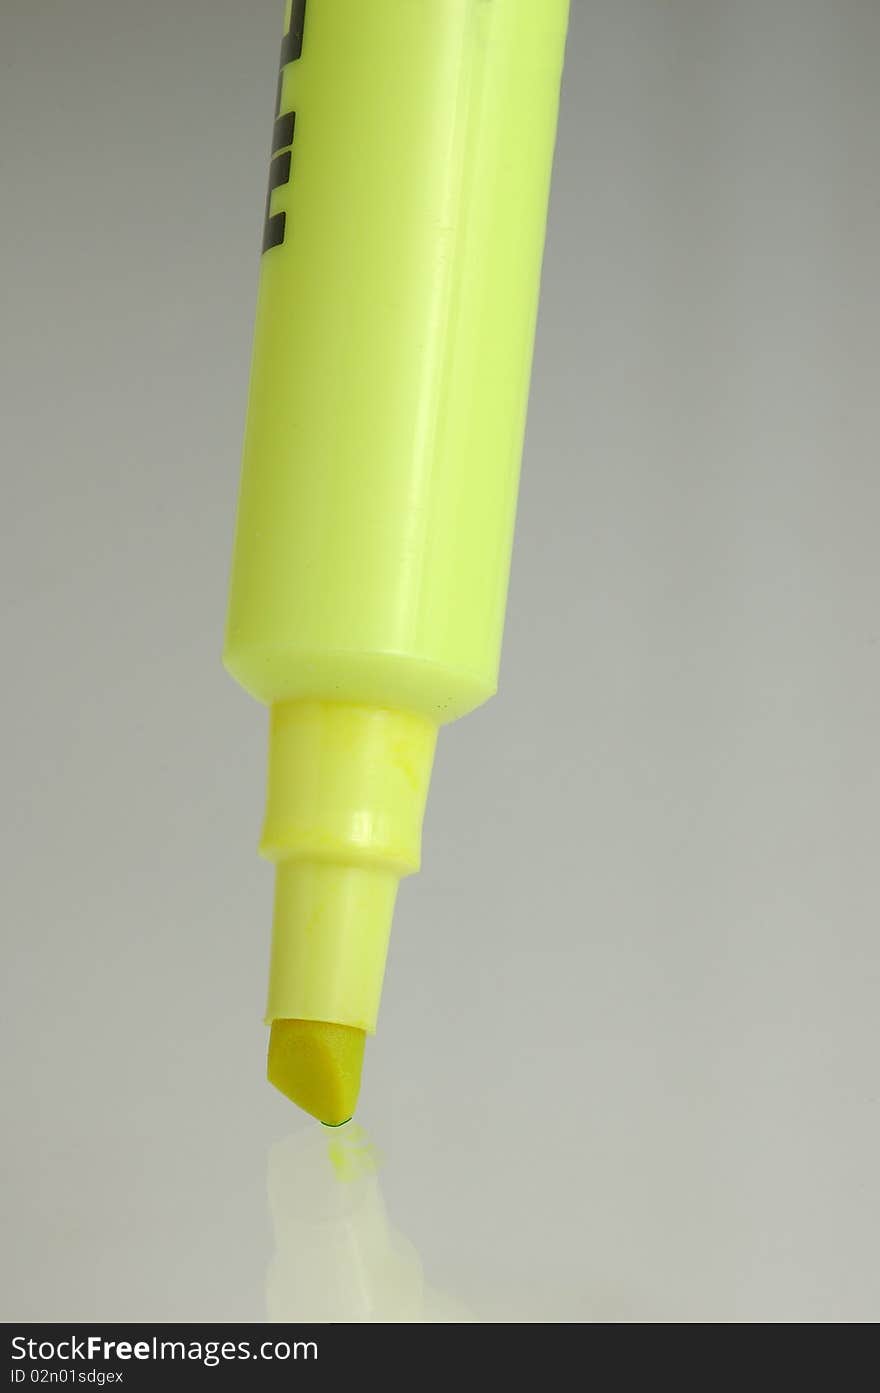 Yellow hi-liter marker on grey shiny surface